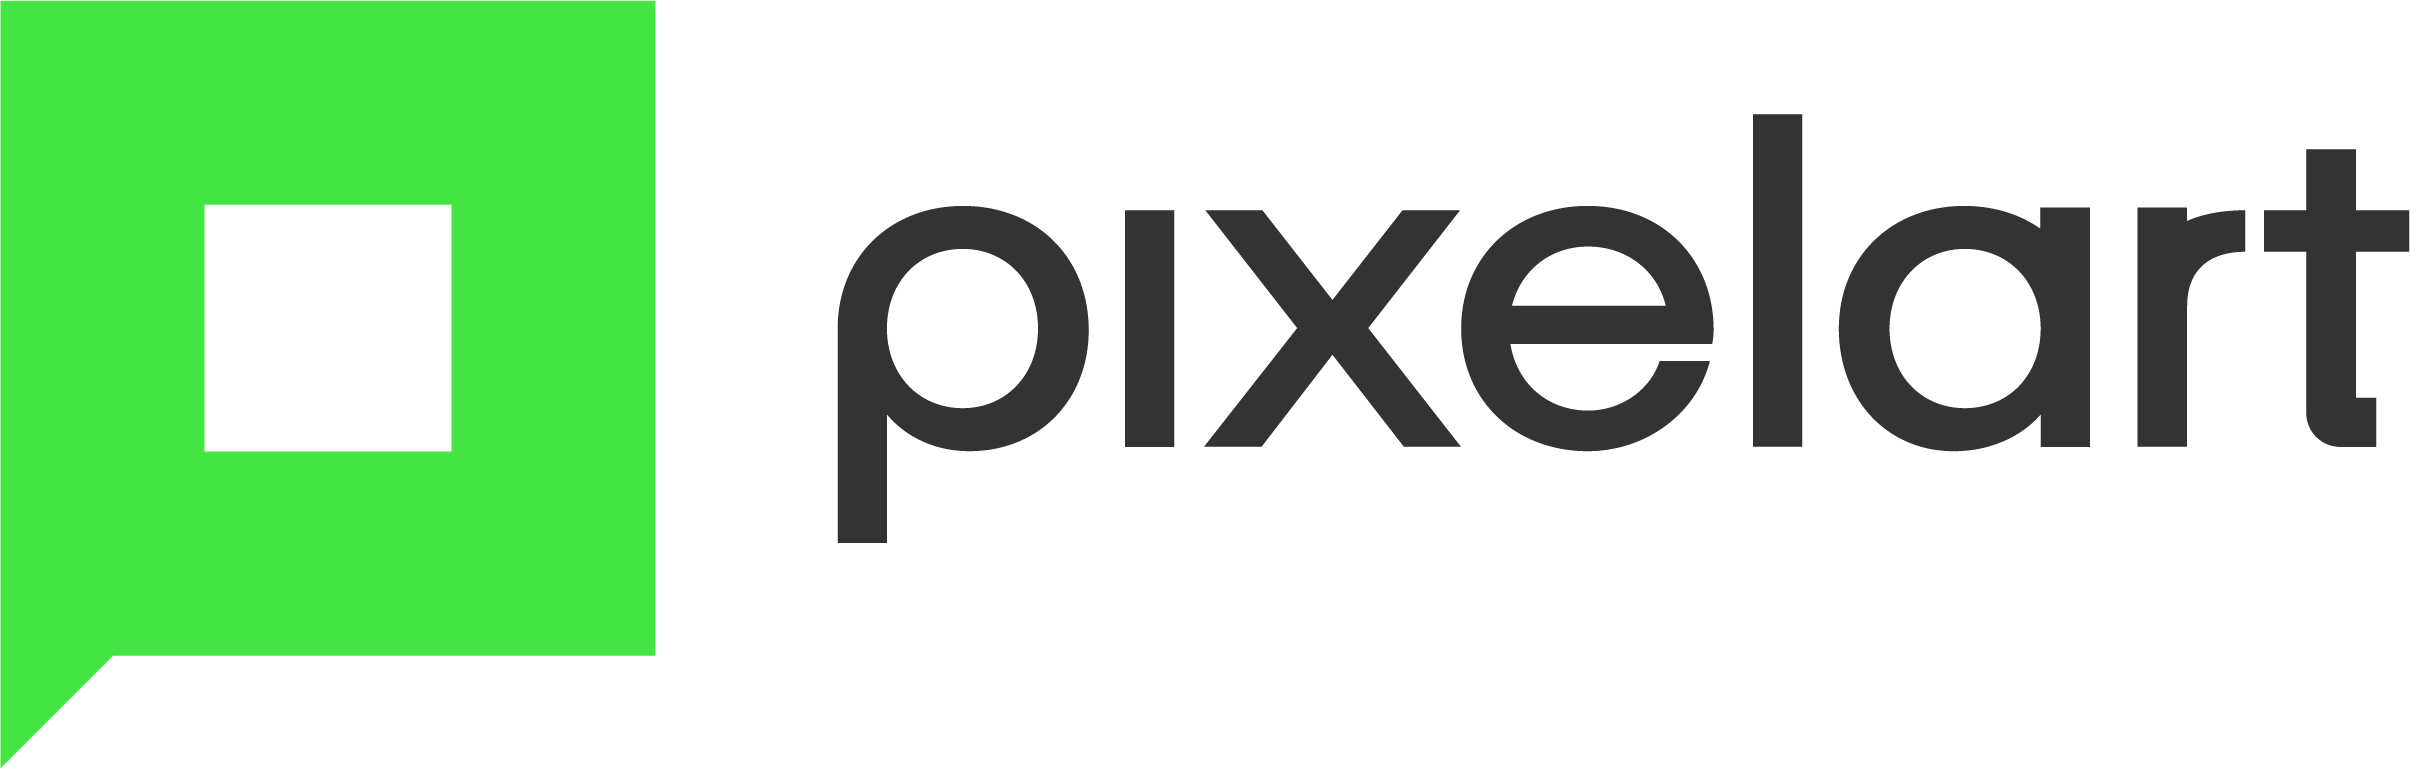 logo-pixelart-2018-05-08